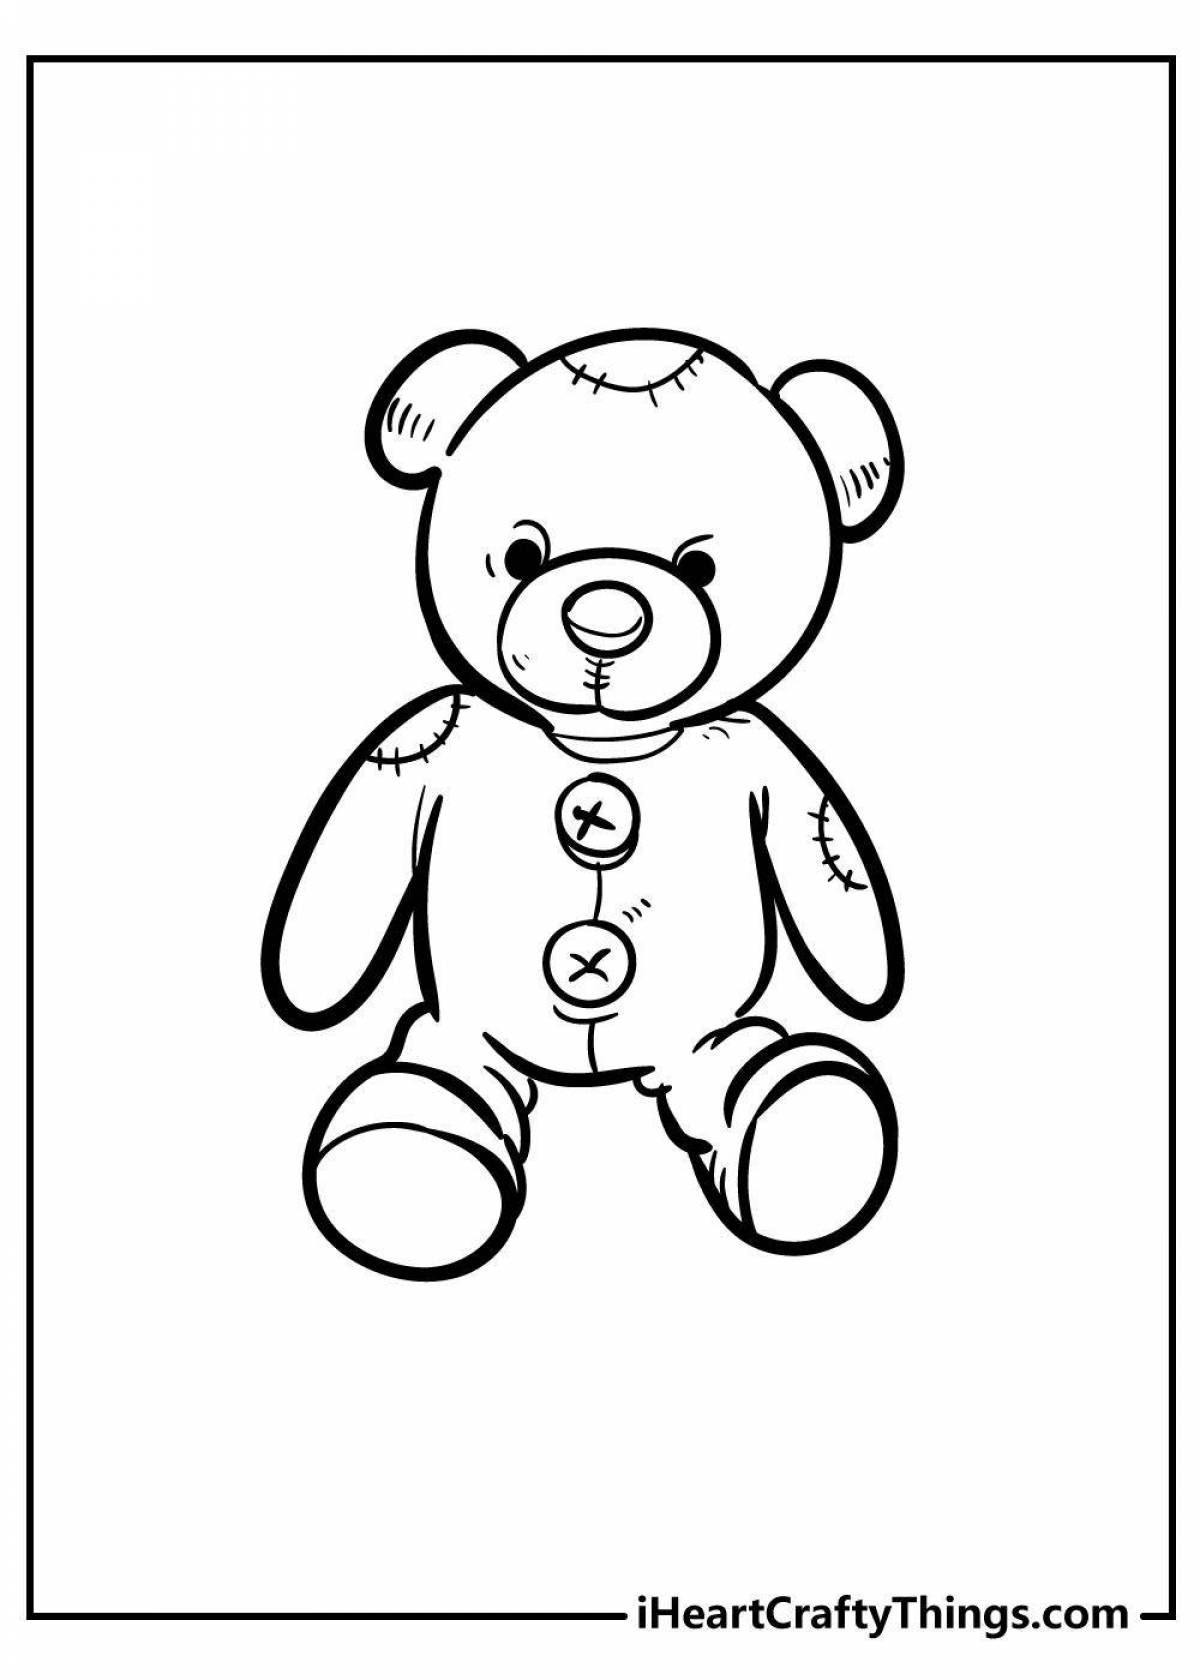 Snuggly coloring page медведь неуклюжий